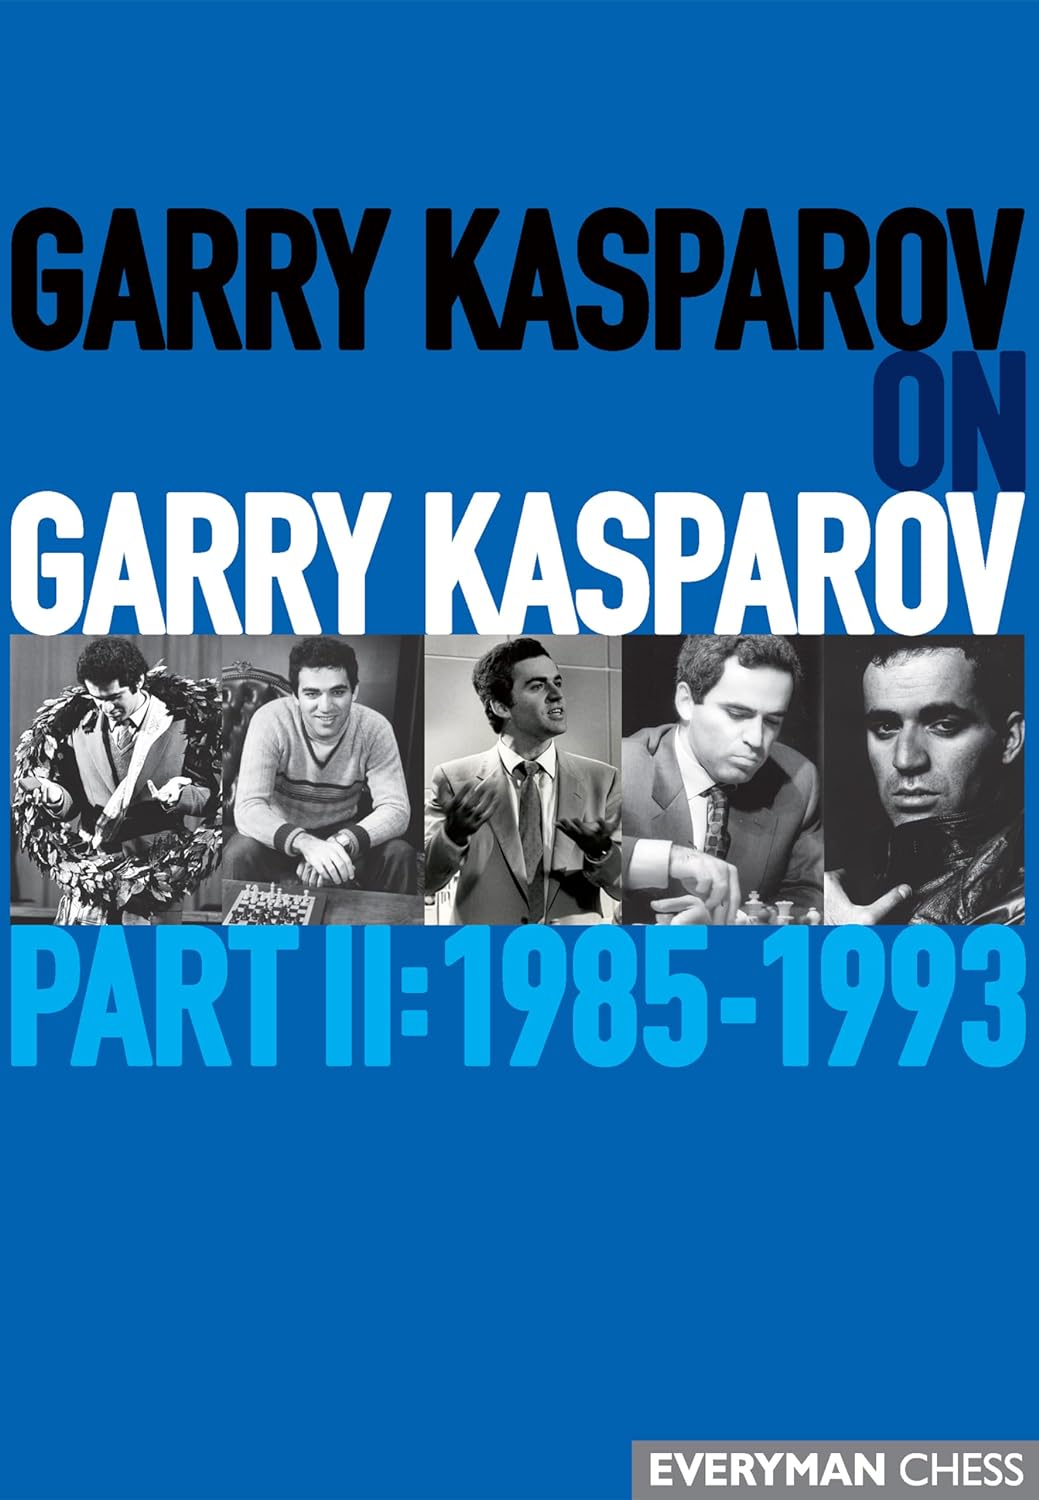 Garry Kasparov on Garry Kasparov: Part 2: 1985-1993